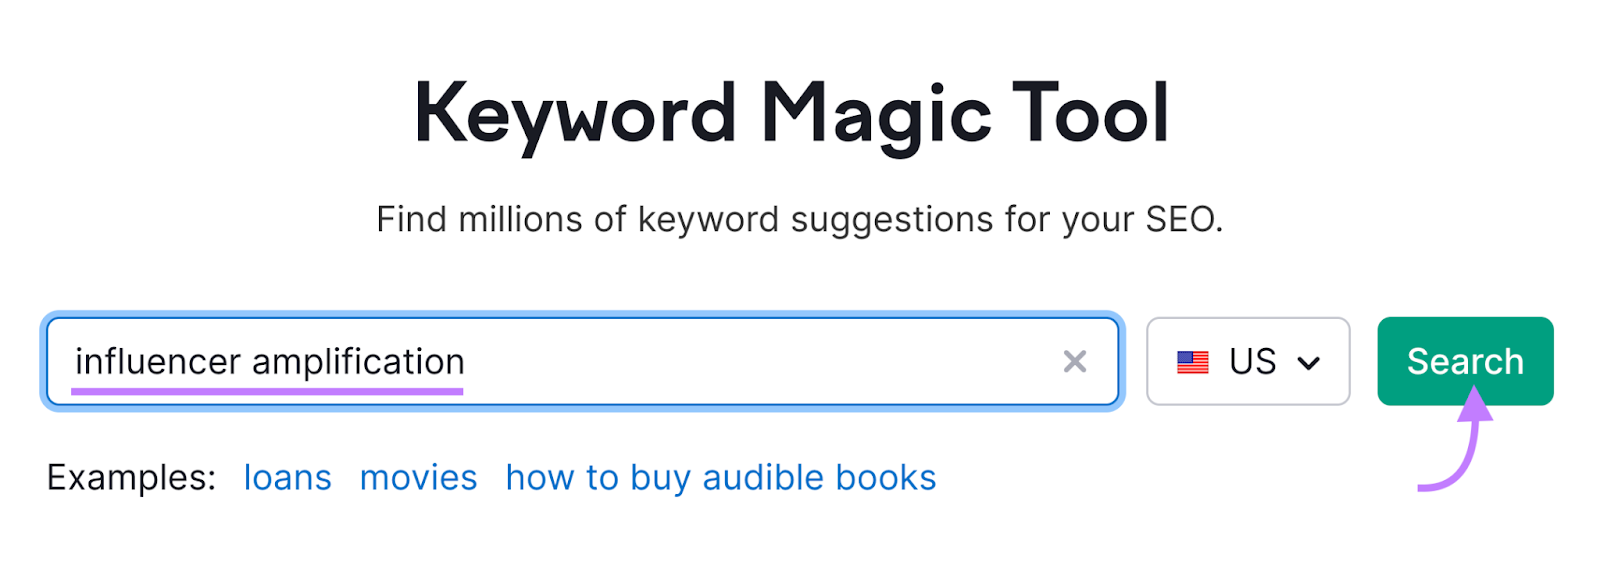 Keyword Magic Tool search bar